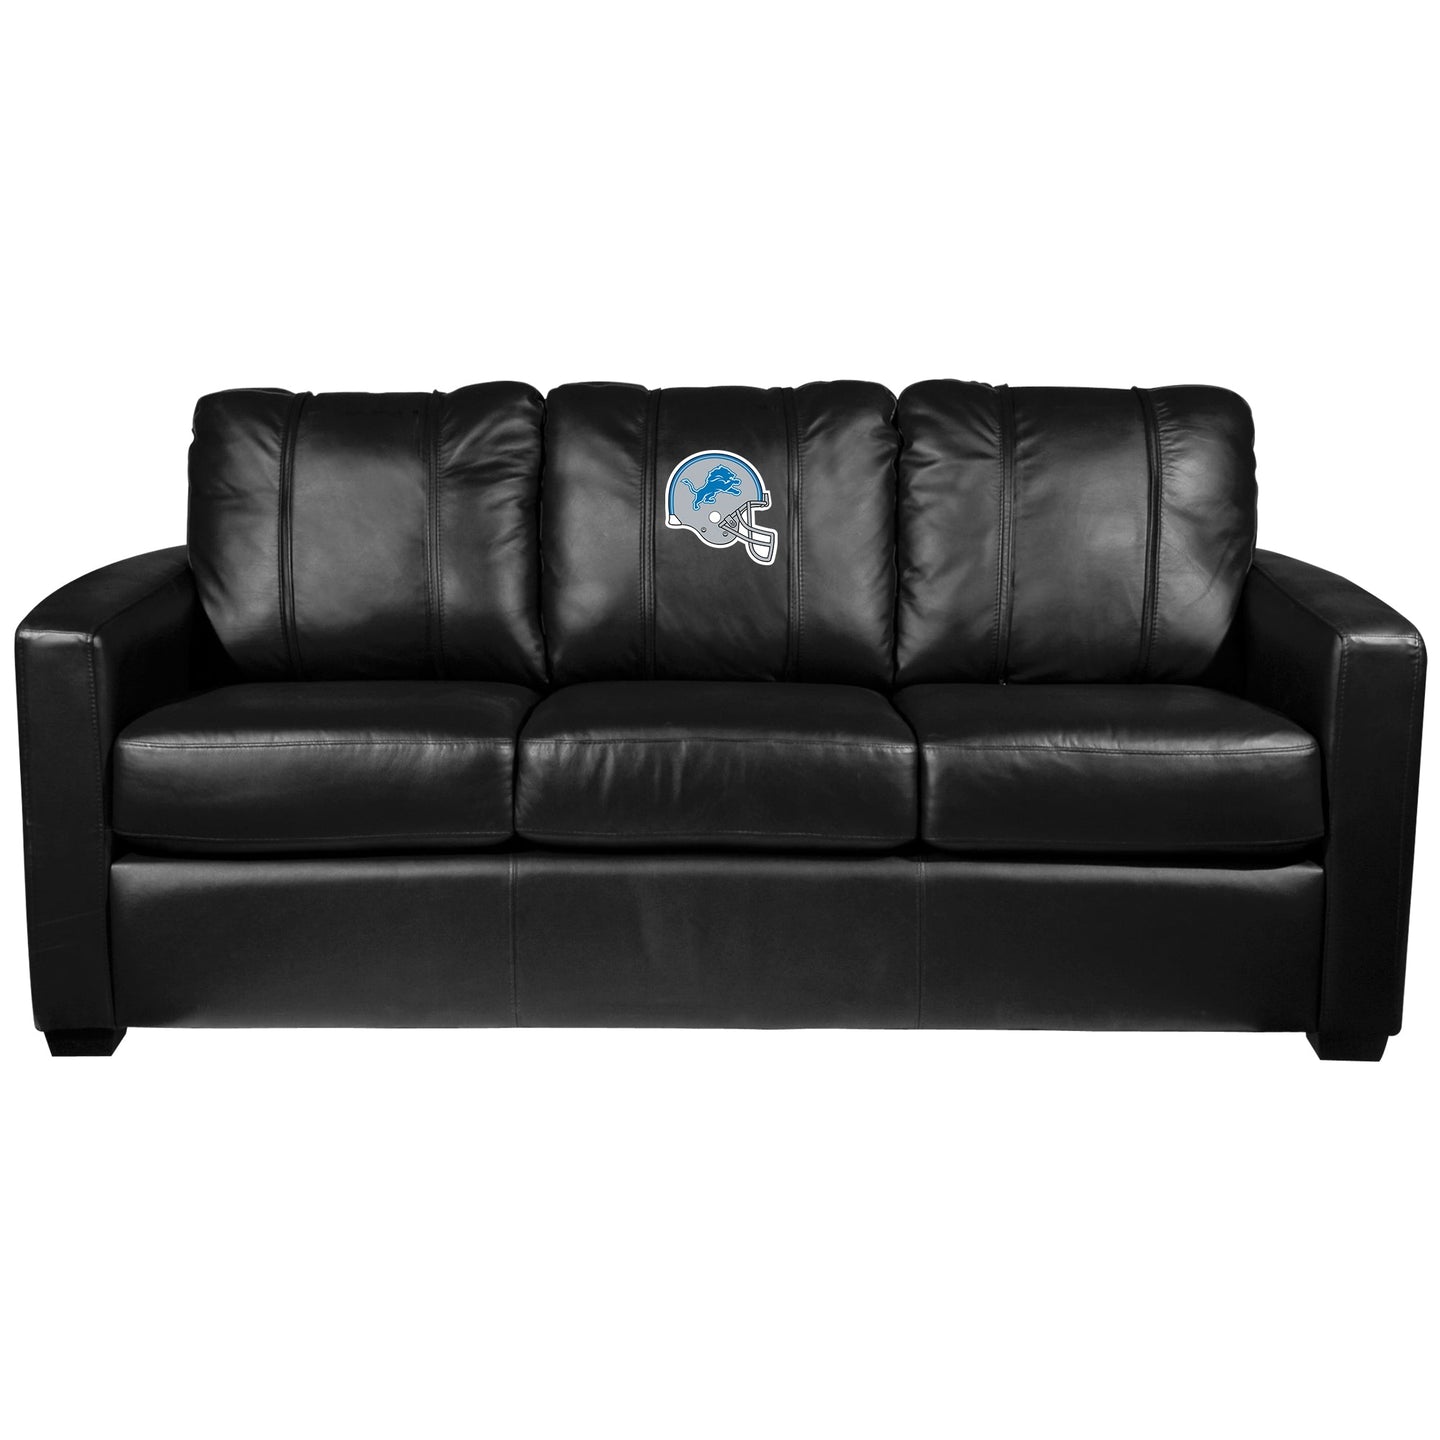 Silver Sofa with Detroit Lions Helmet Logo